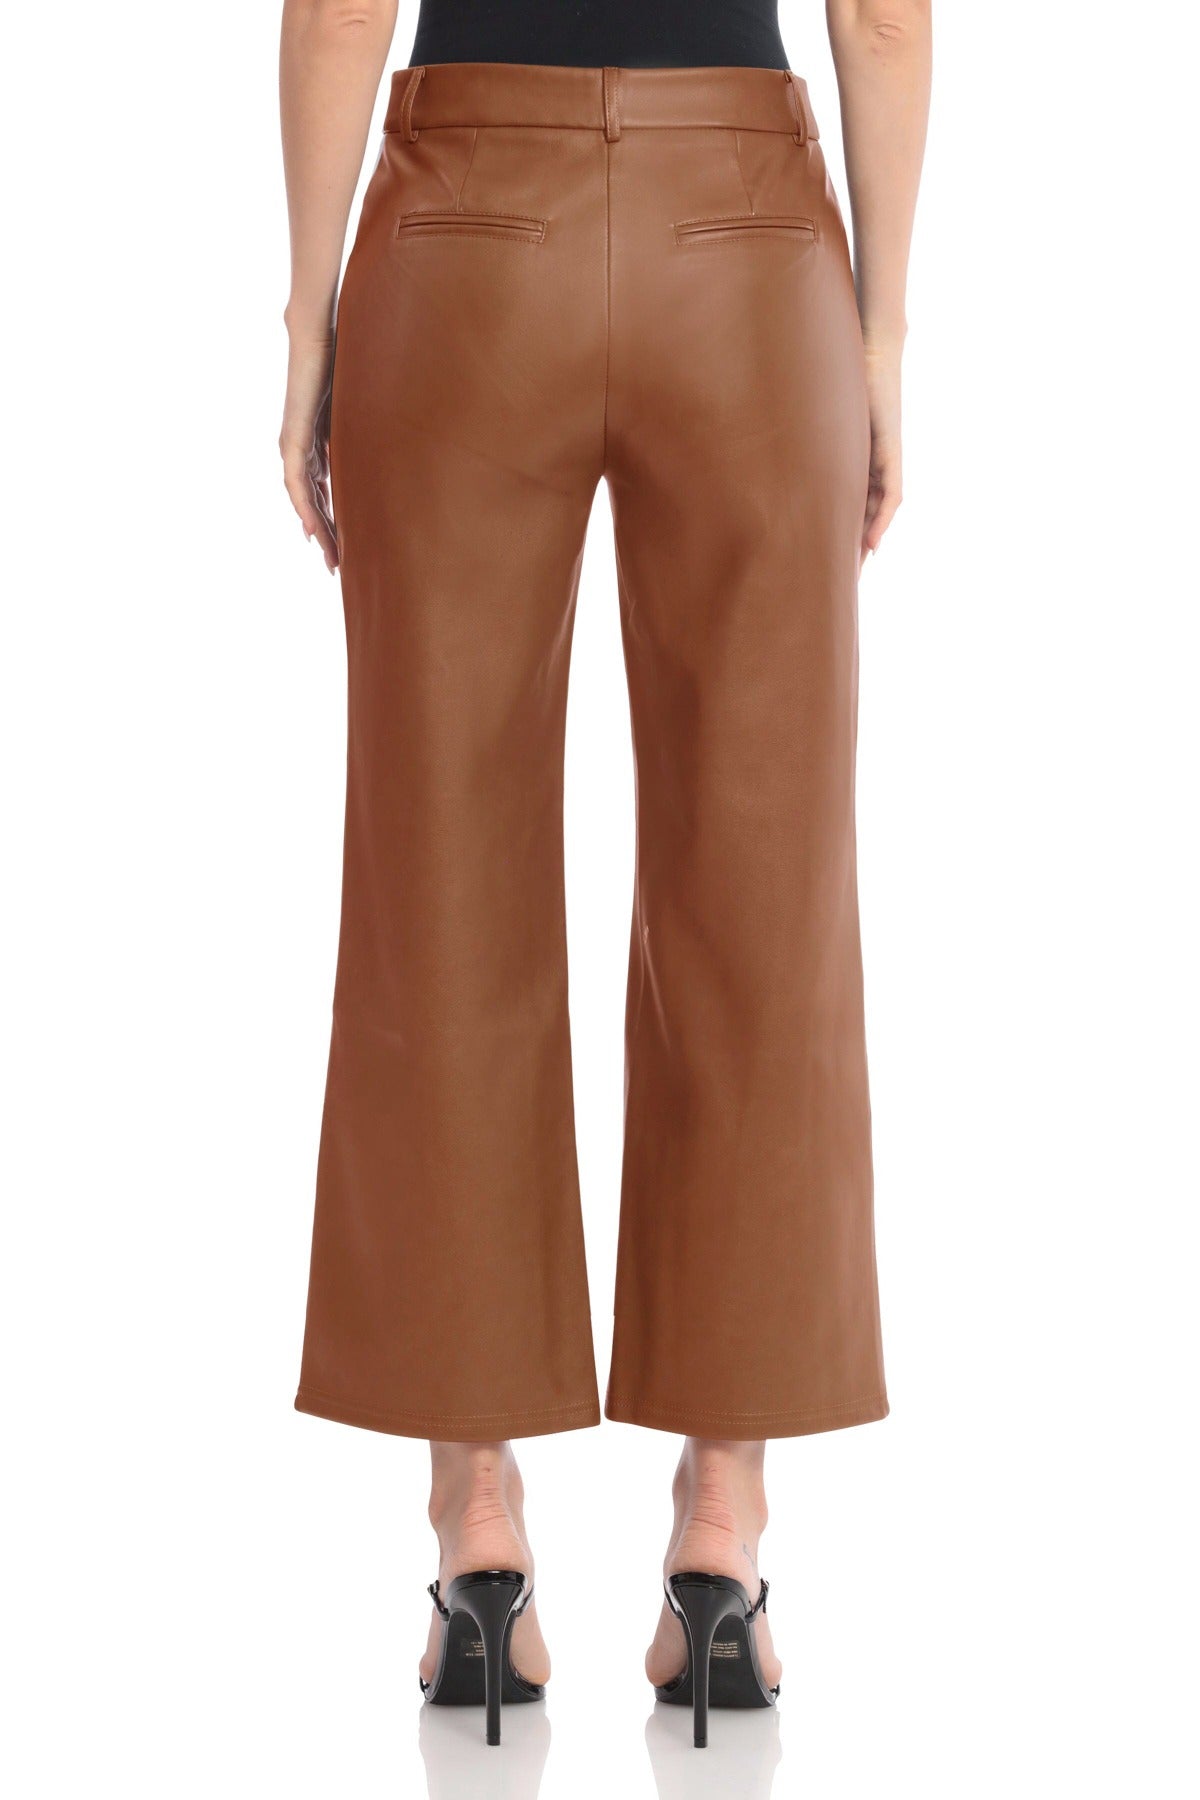 Faux Leather Seam-Front Straight Leg Trouser Pants Cognac Brown - Figure Flattering Work Appropriate Bottoms for Women by Avec Les Filles